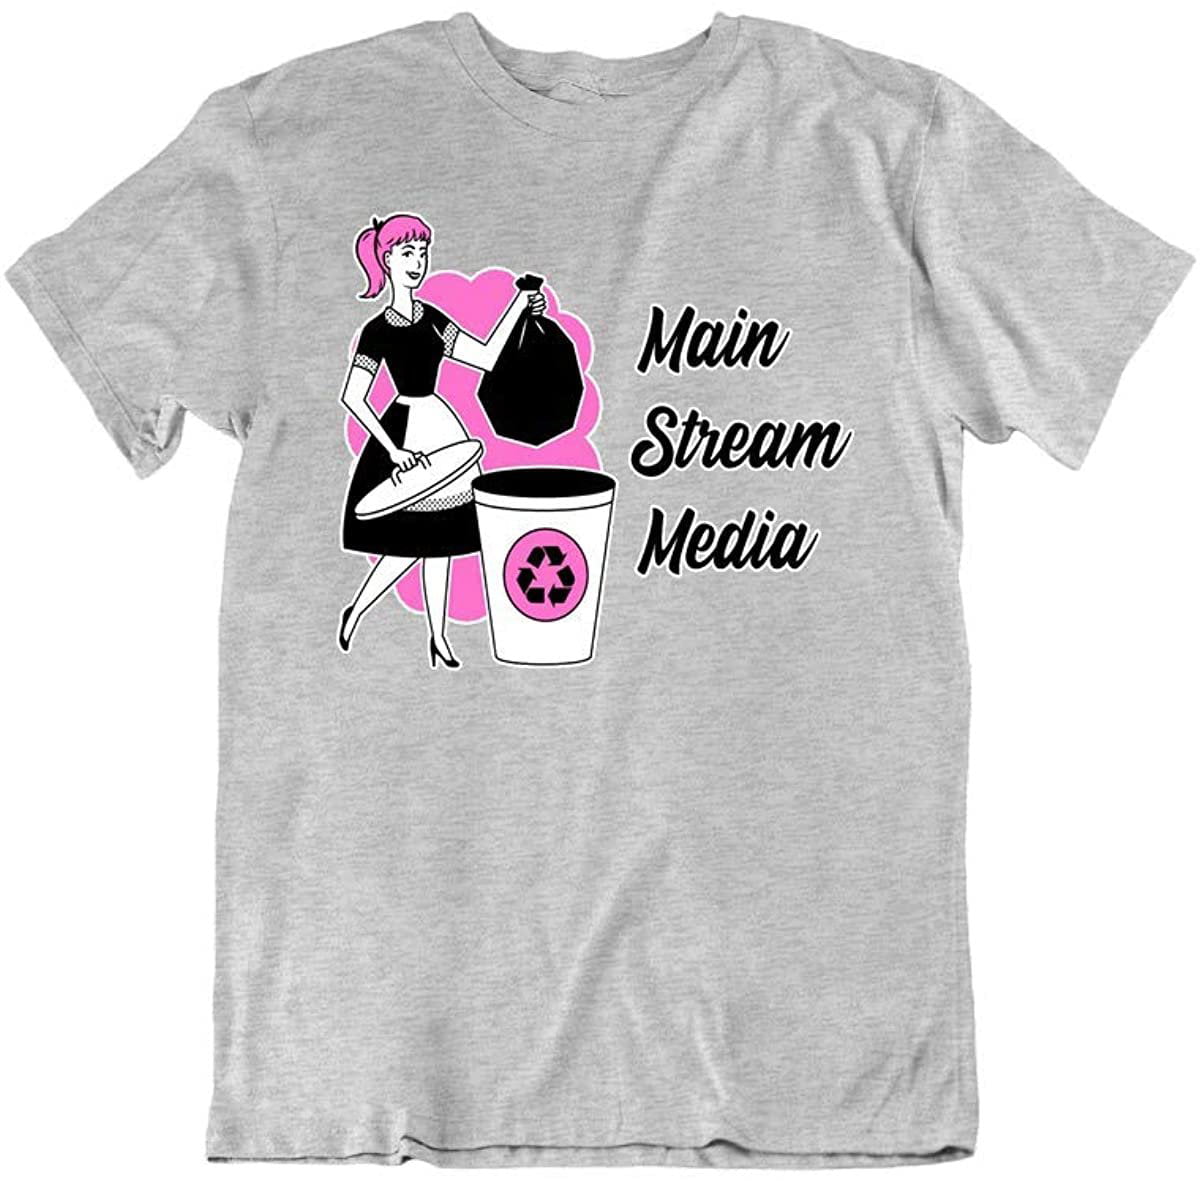 Stream Designs, Shirts